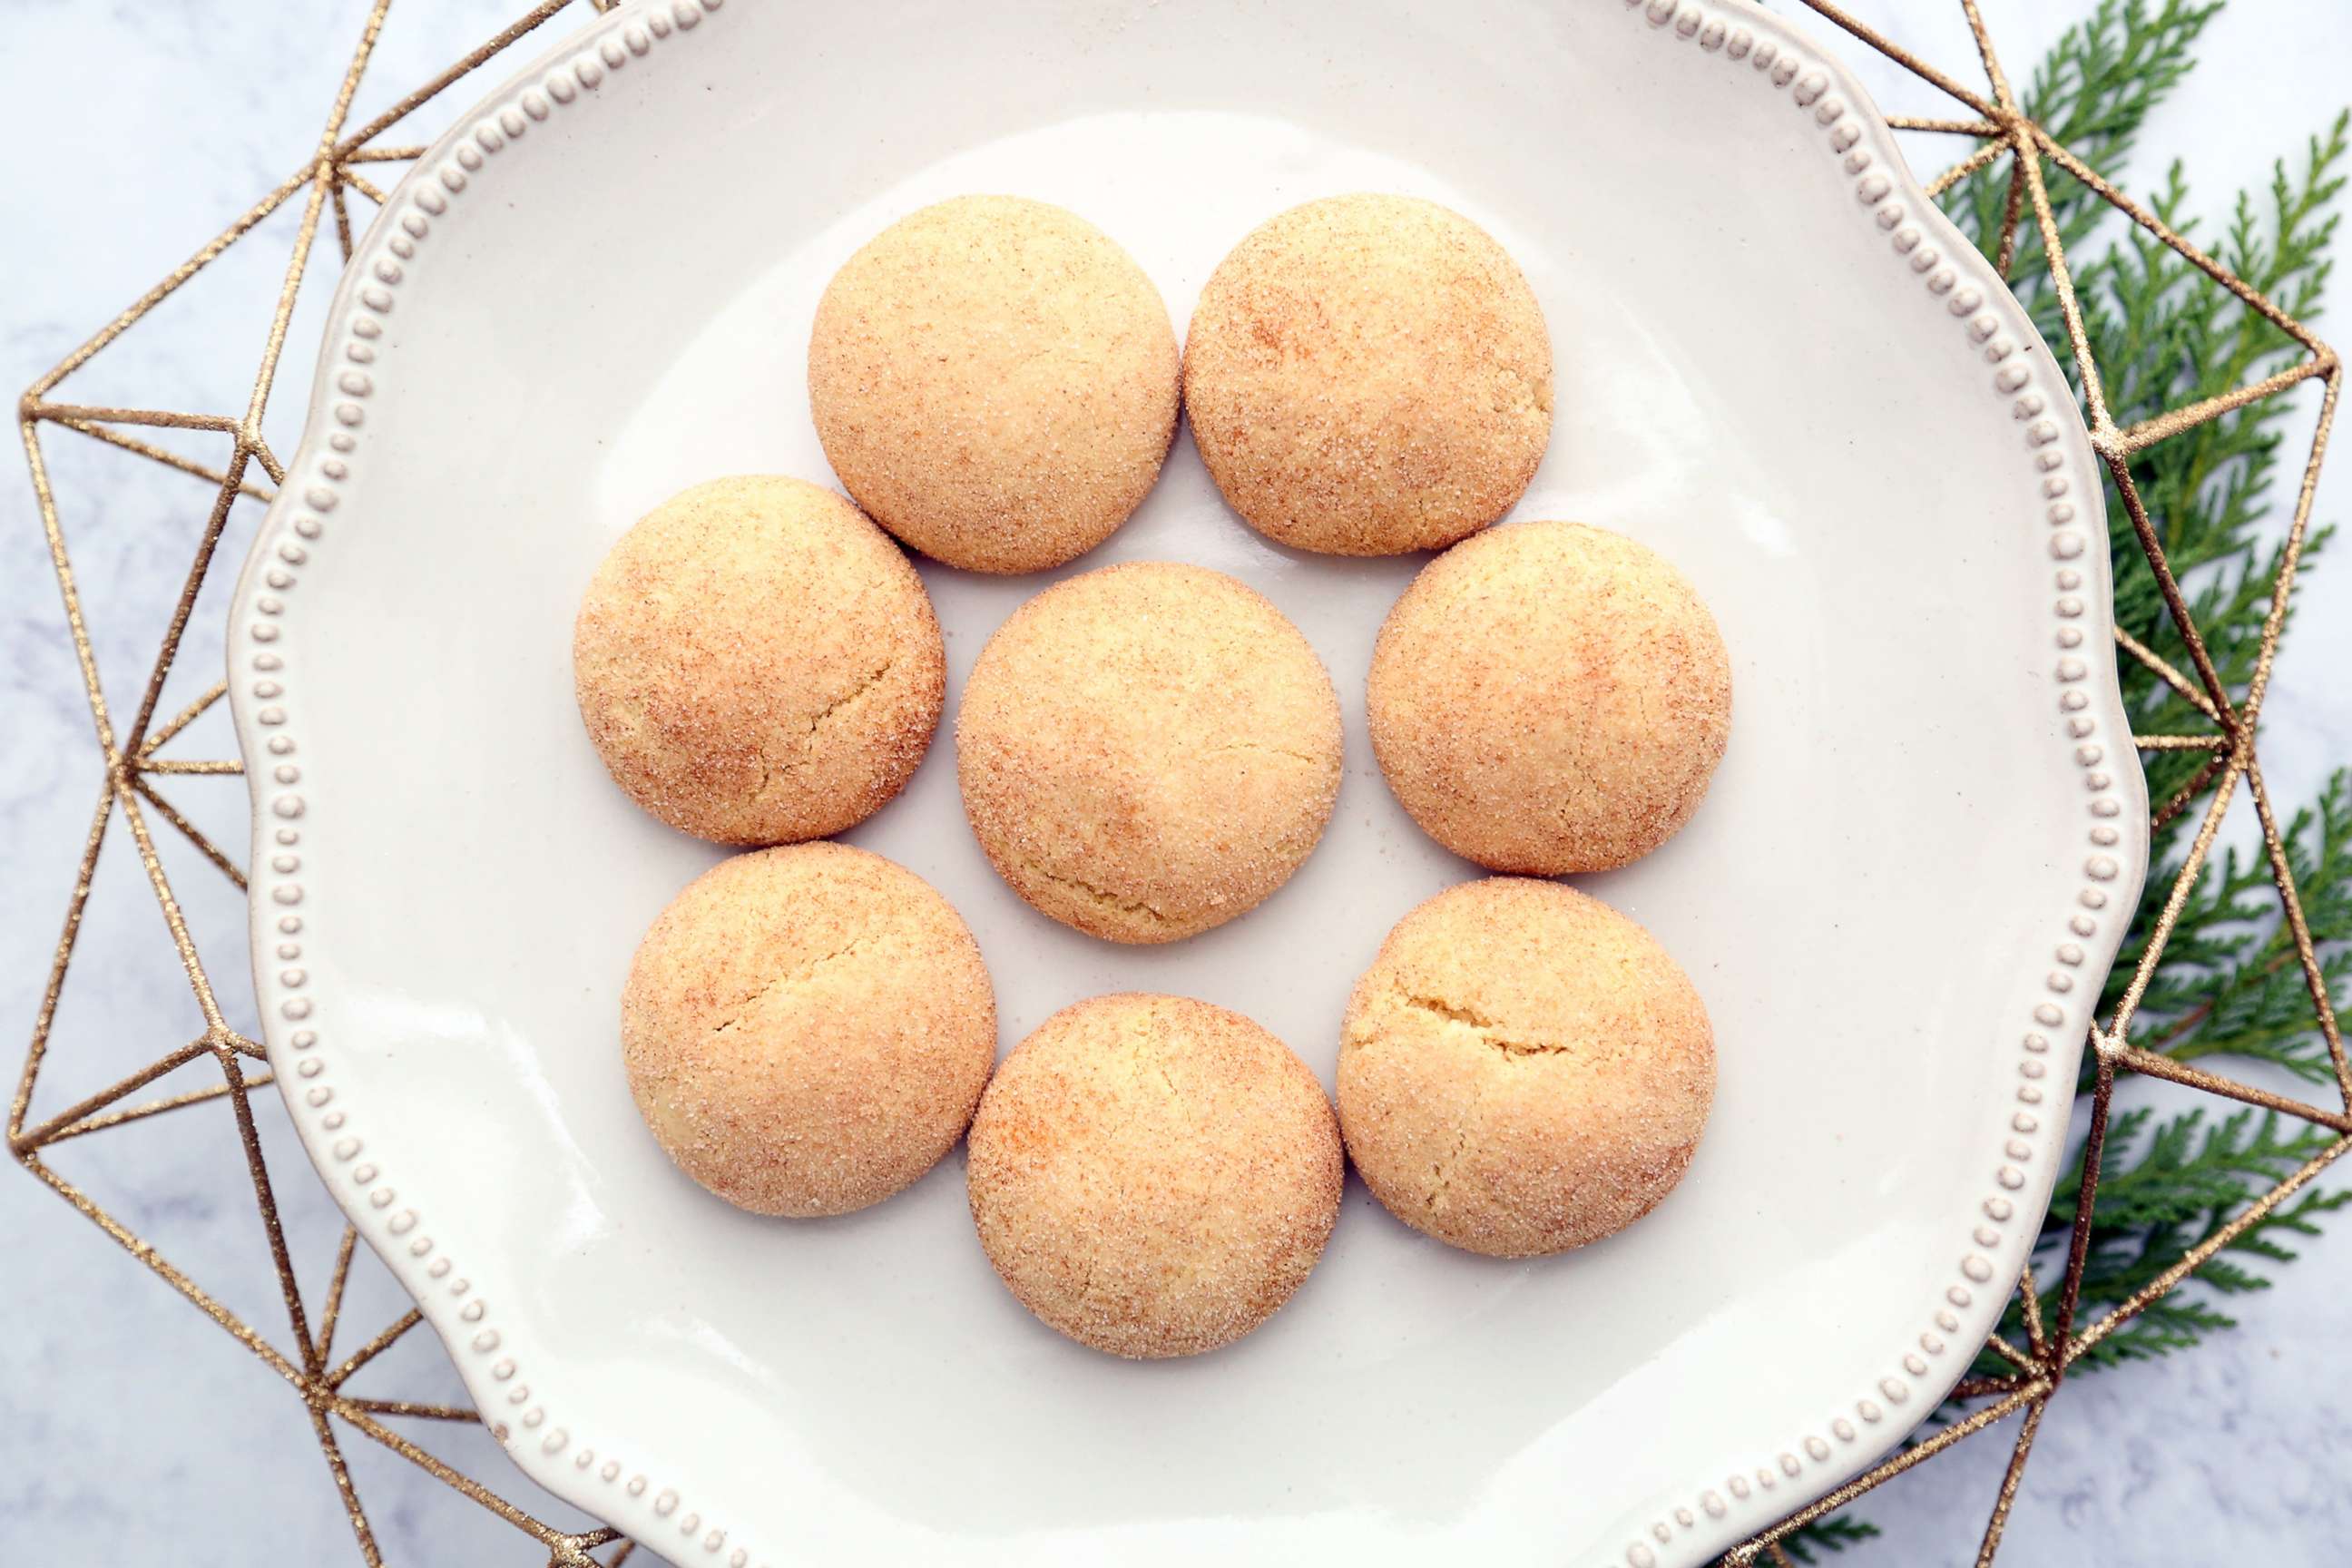 PHOTO: Lauren Conrad's Snickerdoodle cookies are pictured here. 